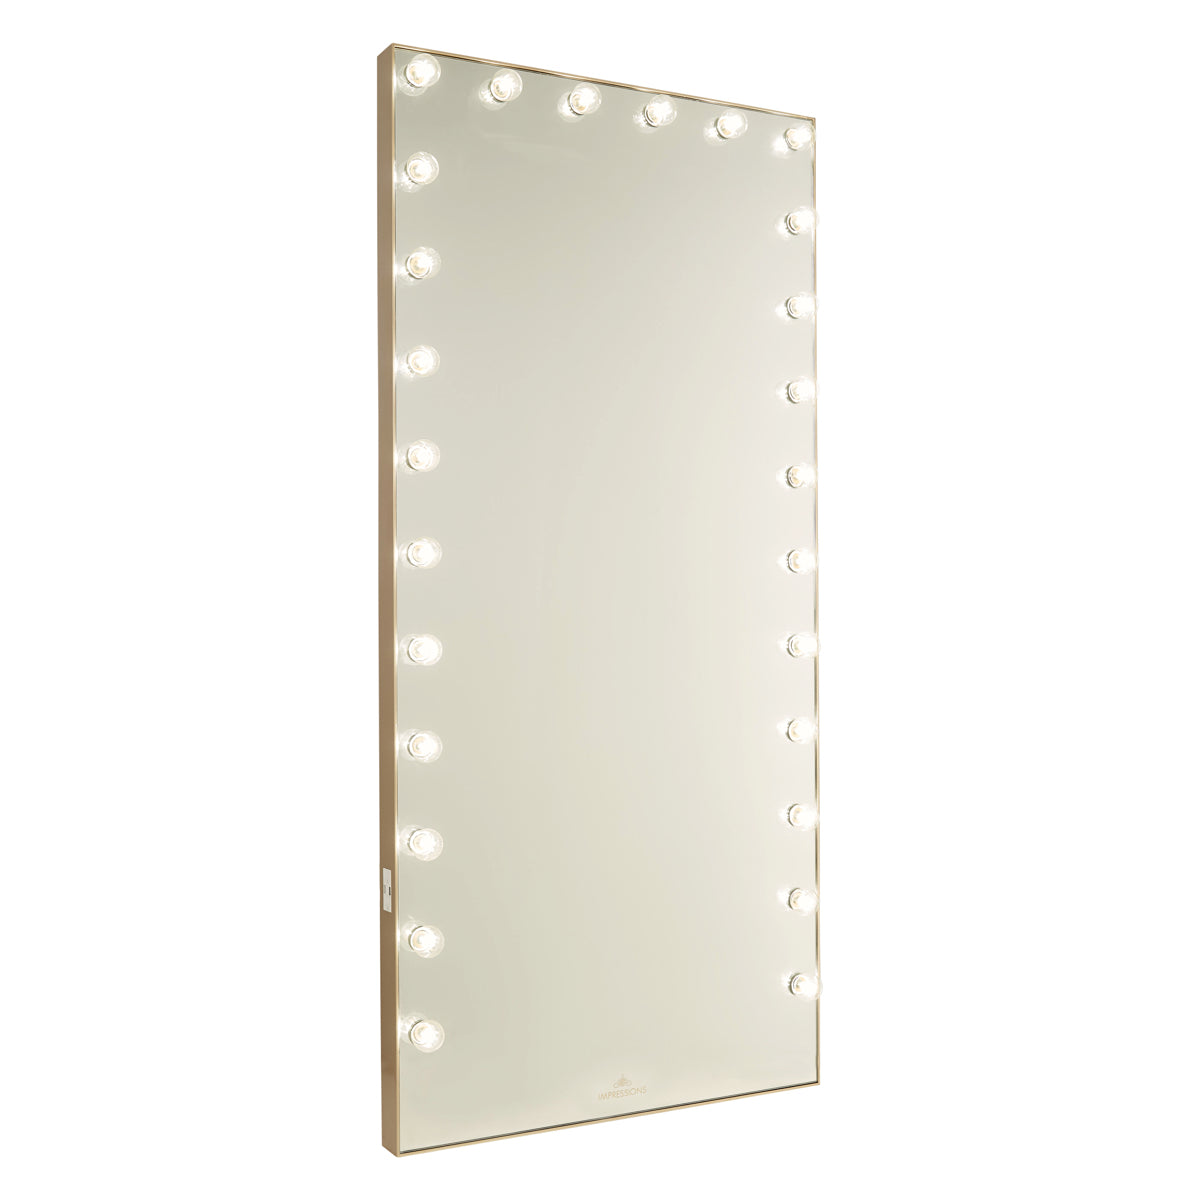 Hollywood Glow® FL Pro Vanity Floor Mirror • Impressions Vanity Co.